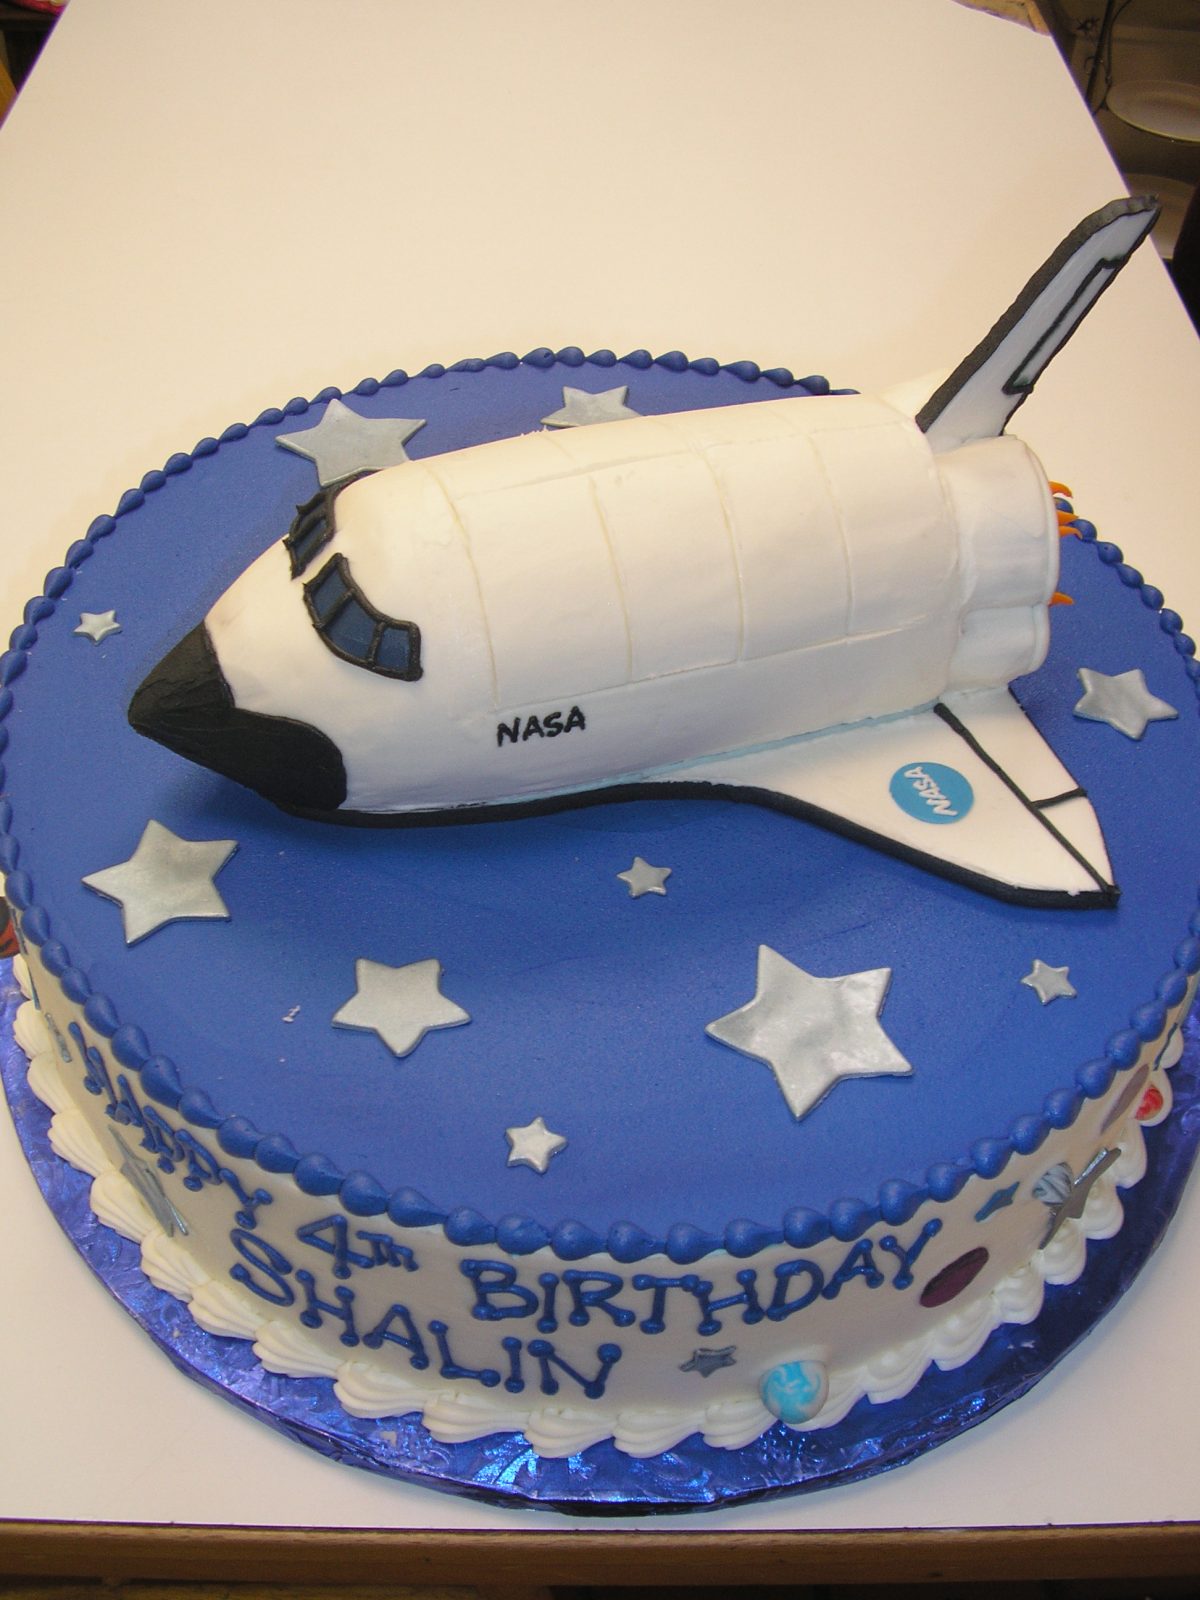 space shuttle cake, NASA cake, 3D space shuttle cake